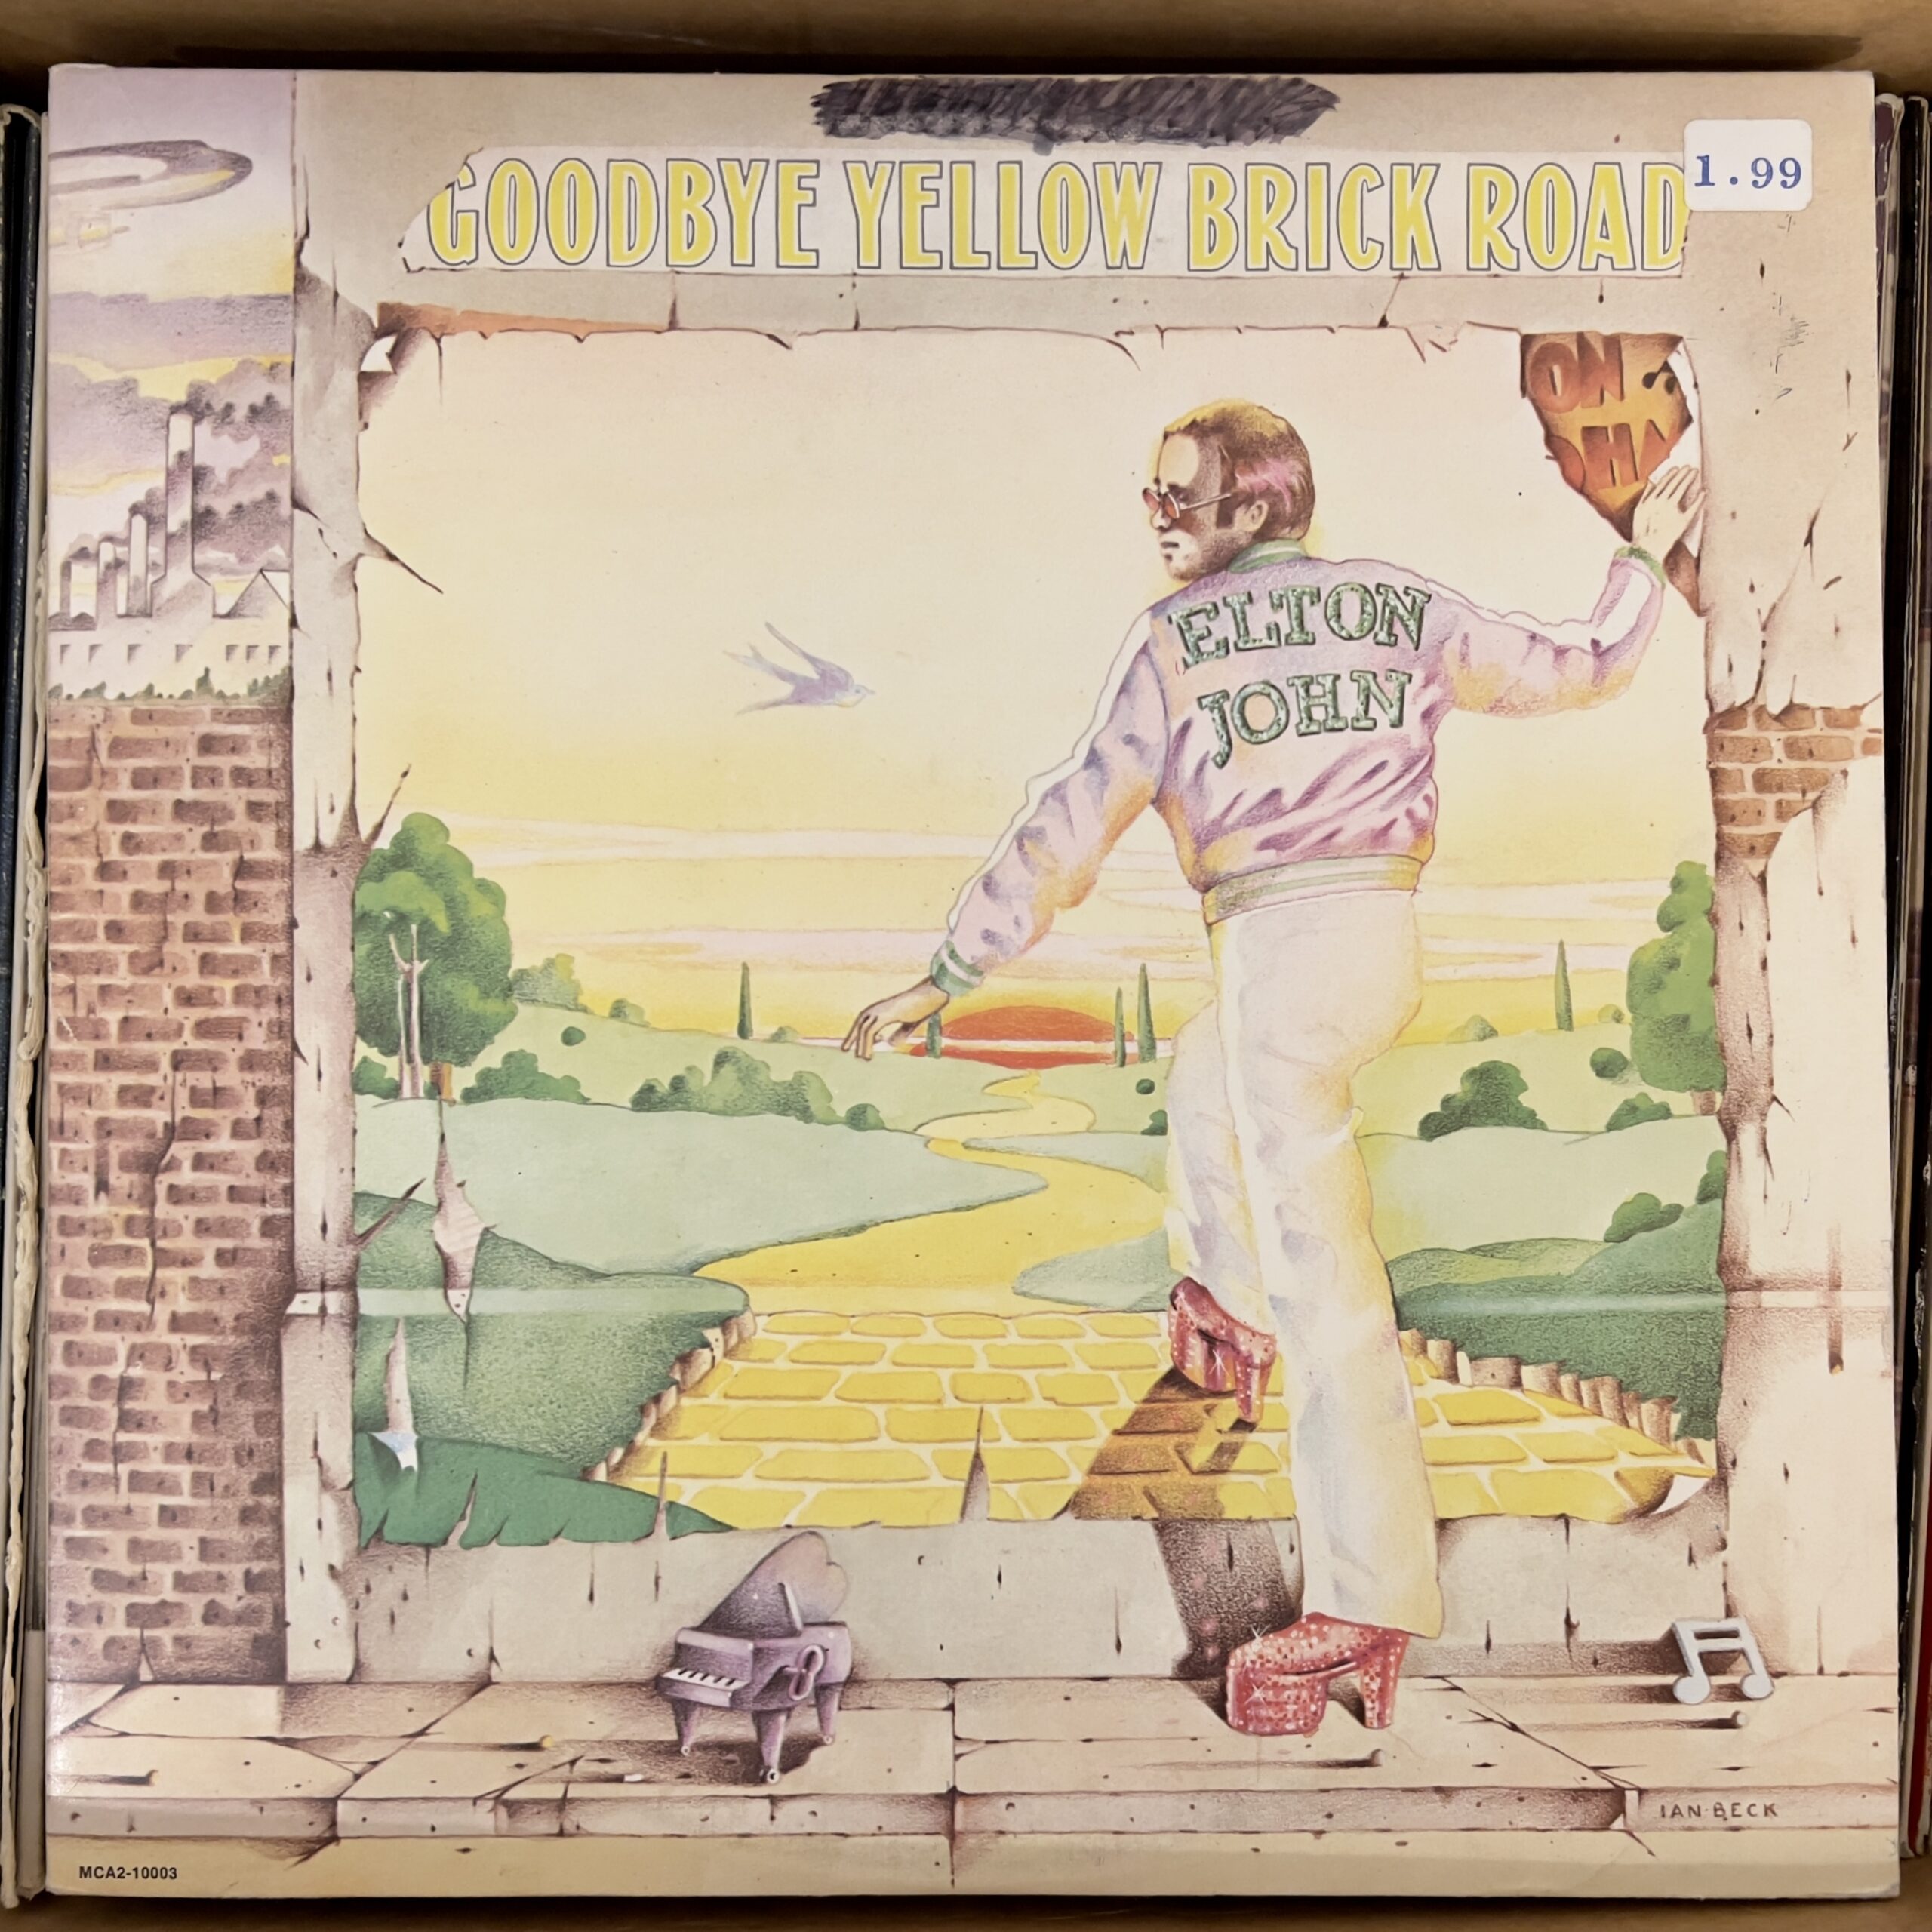 Goodbye Yellow Brick Road by Elton John